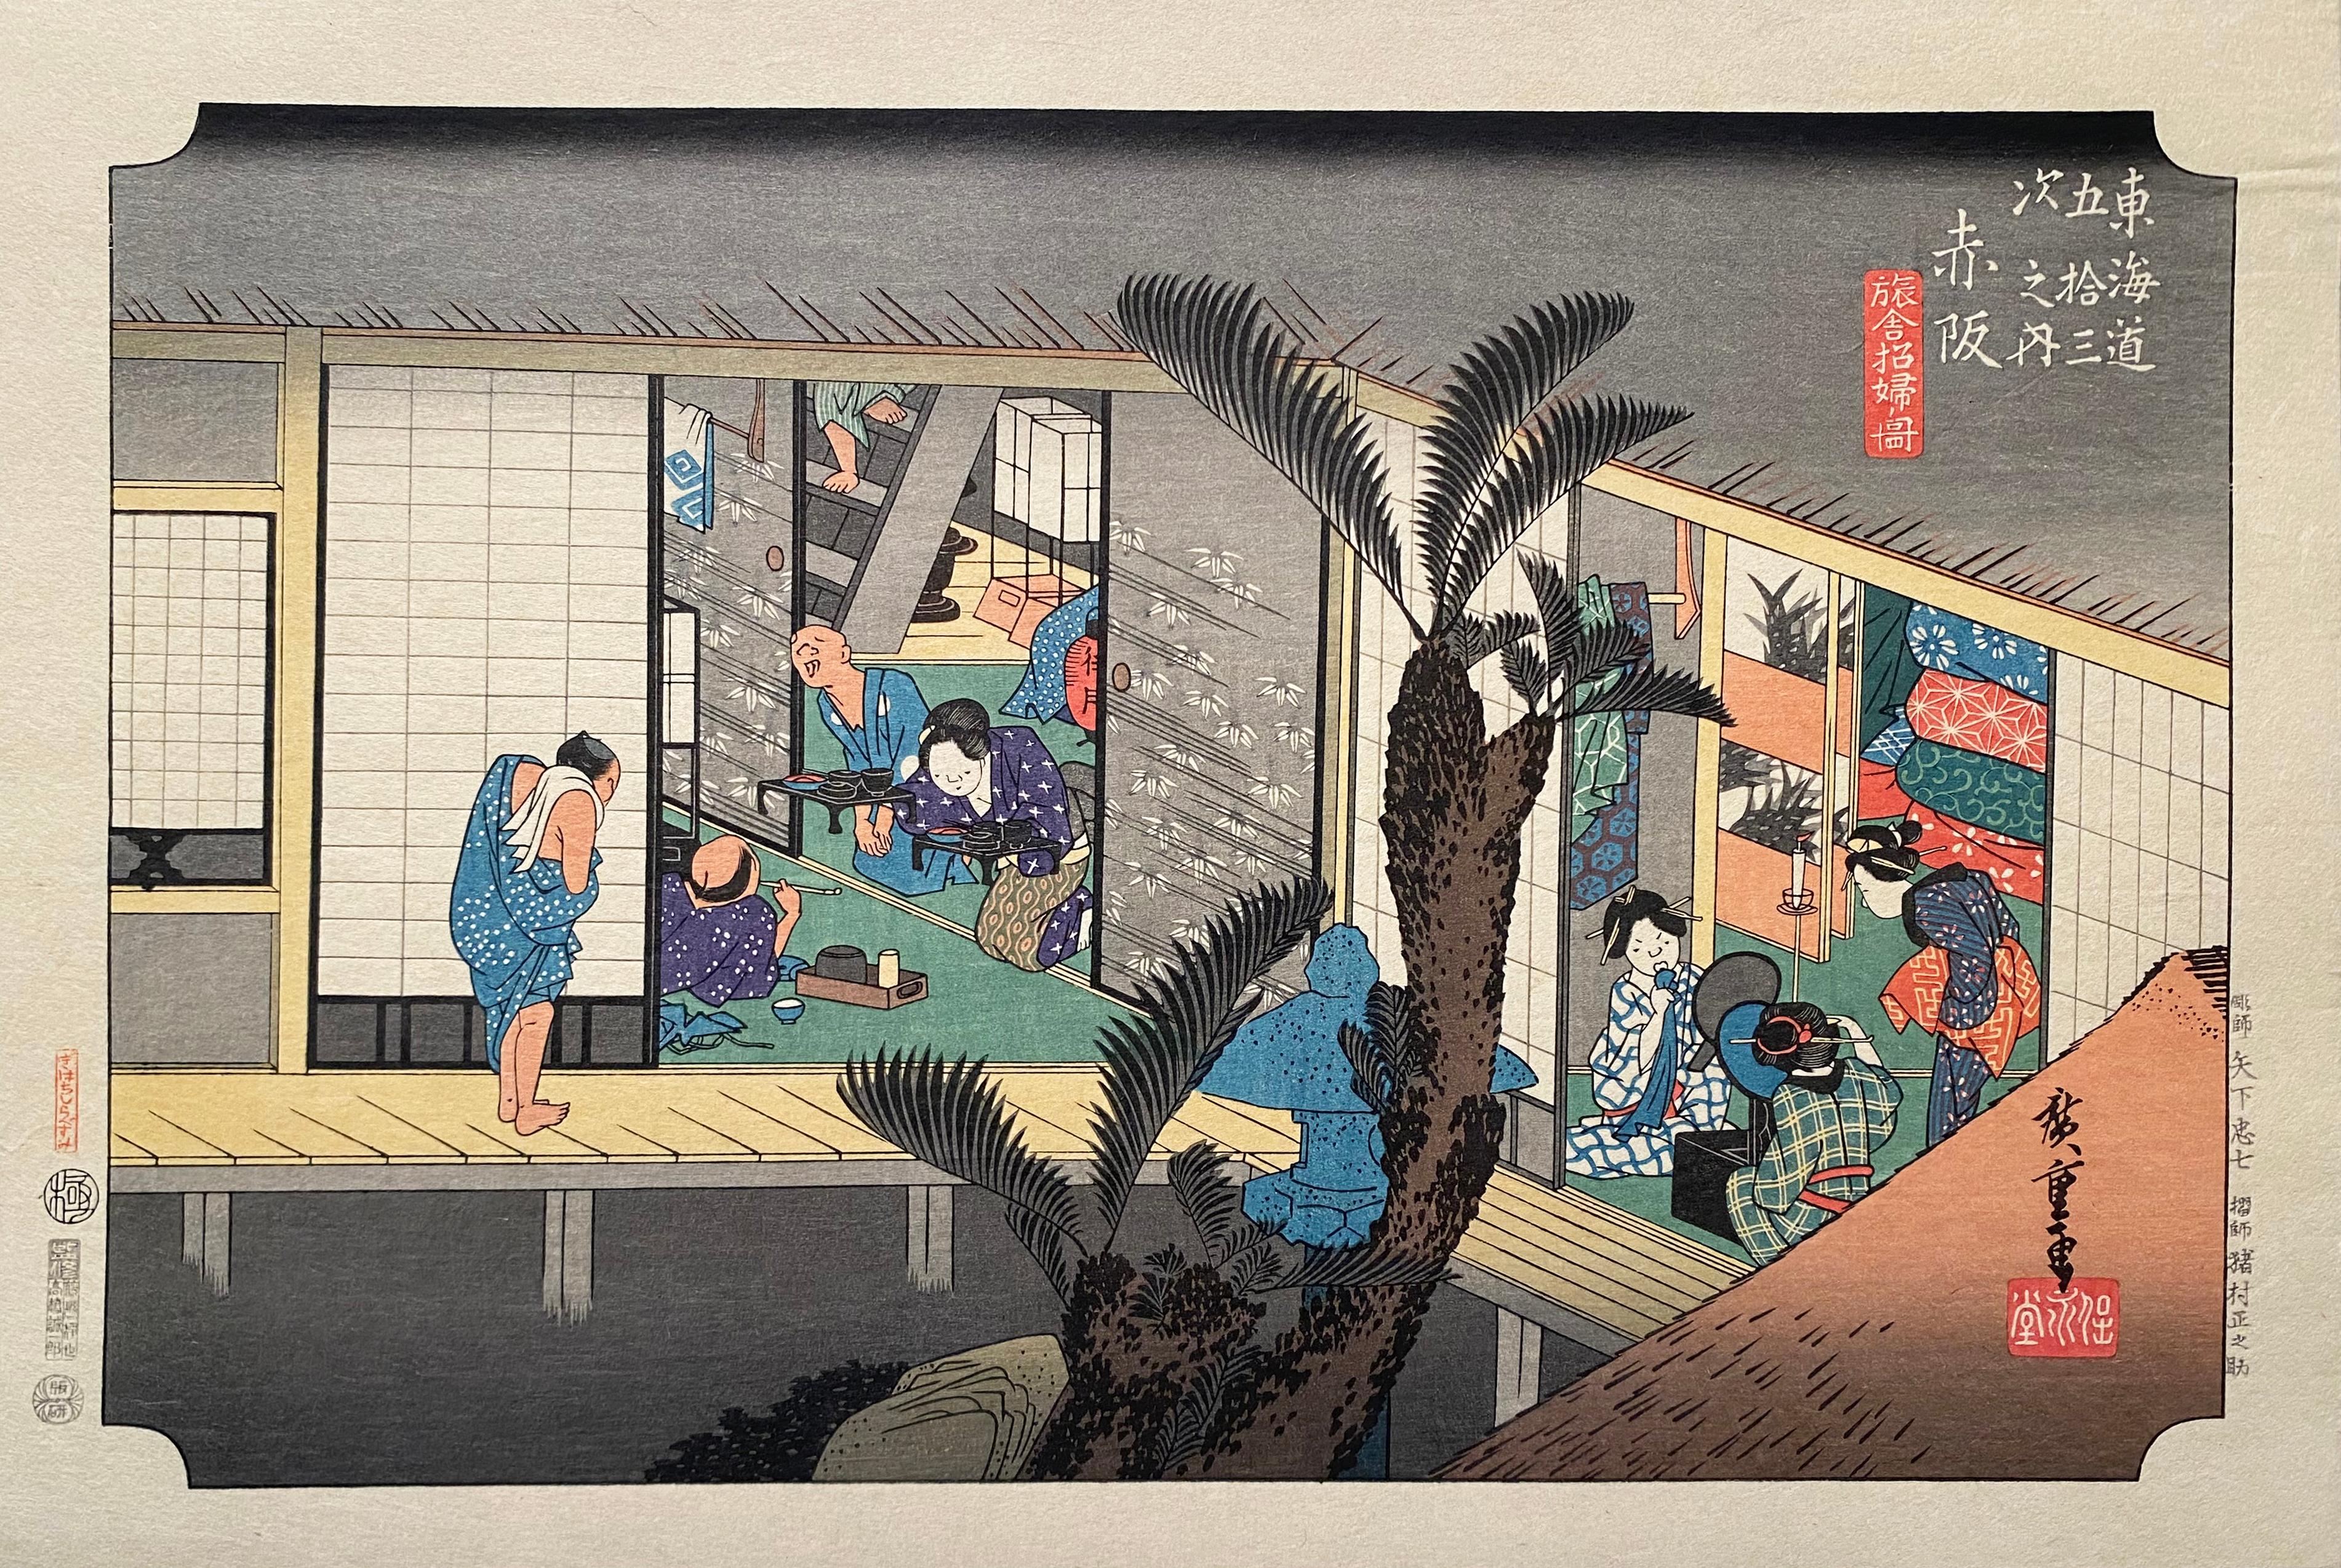 Utagawa Hiroshige (Ando Hiroshige) Landscape Print - 'View of an Inn', After Utagawa Hiroshige 歌川廣重, Ukiyo-e Woodblock, Tokaido